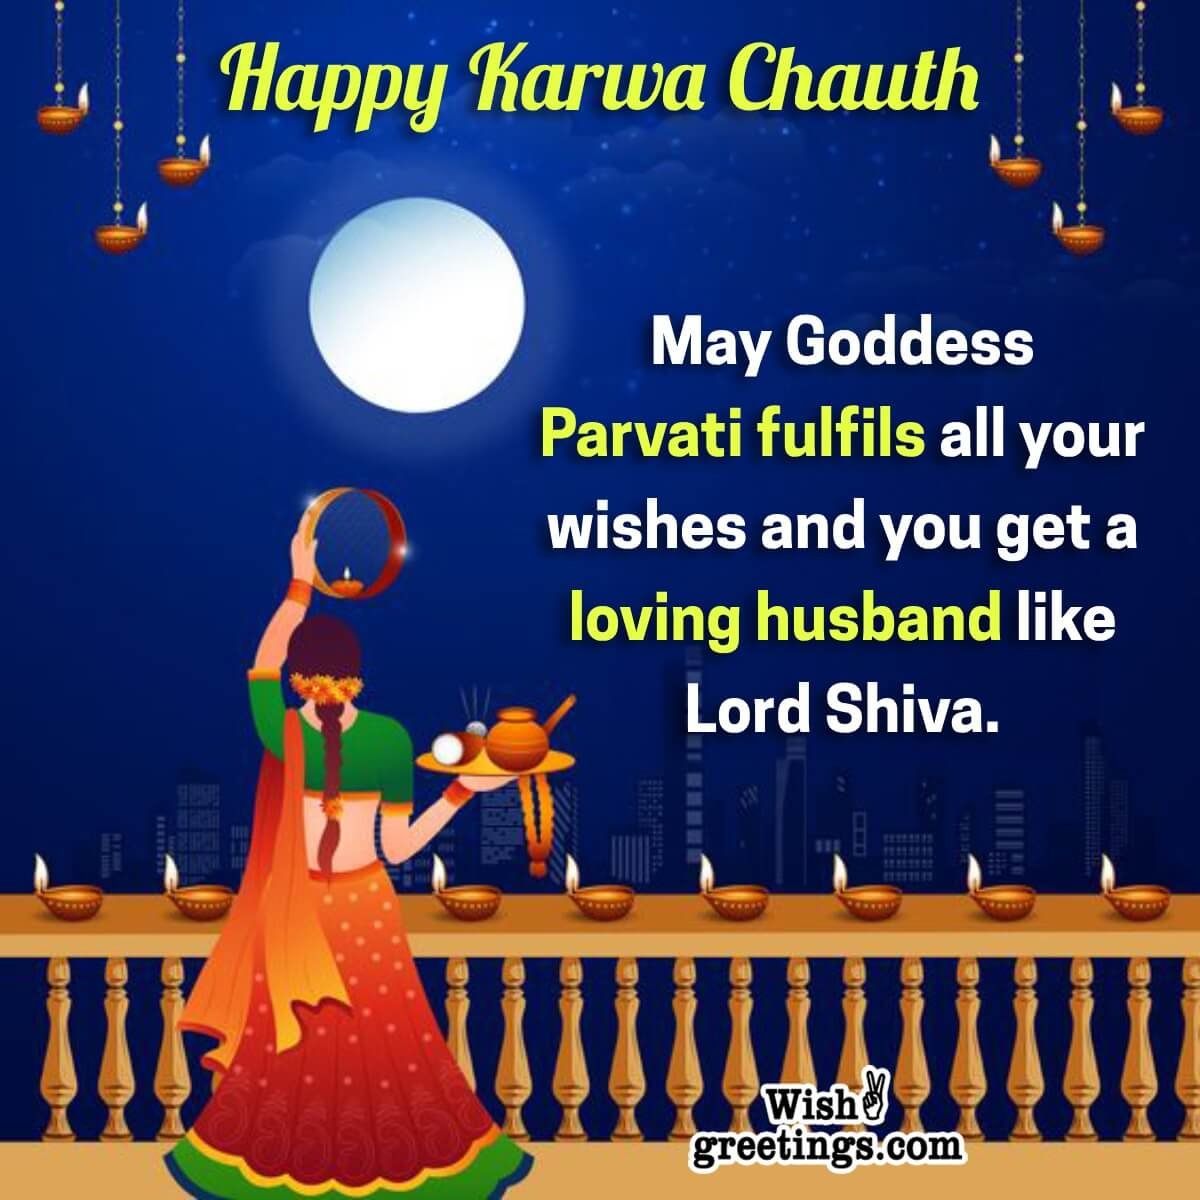 Happy Karwa Chauth Greetings